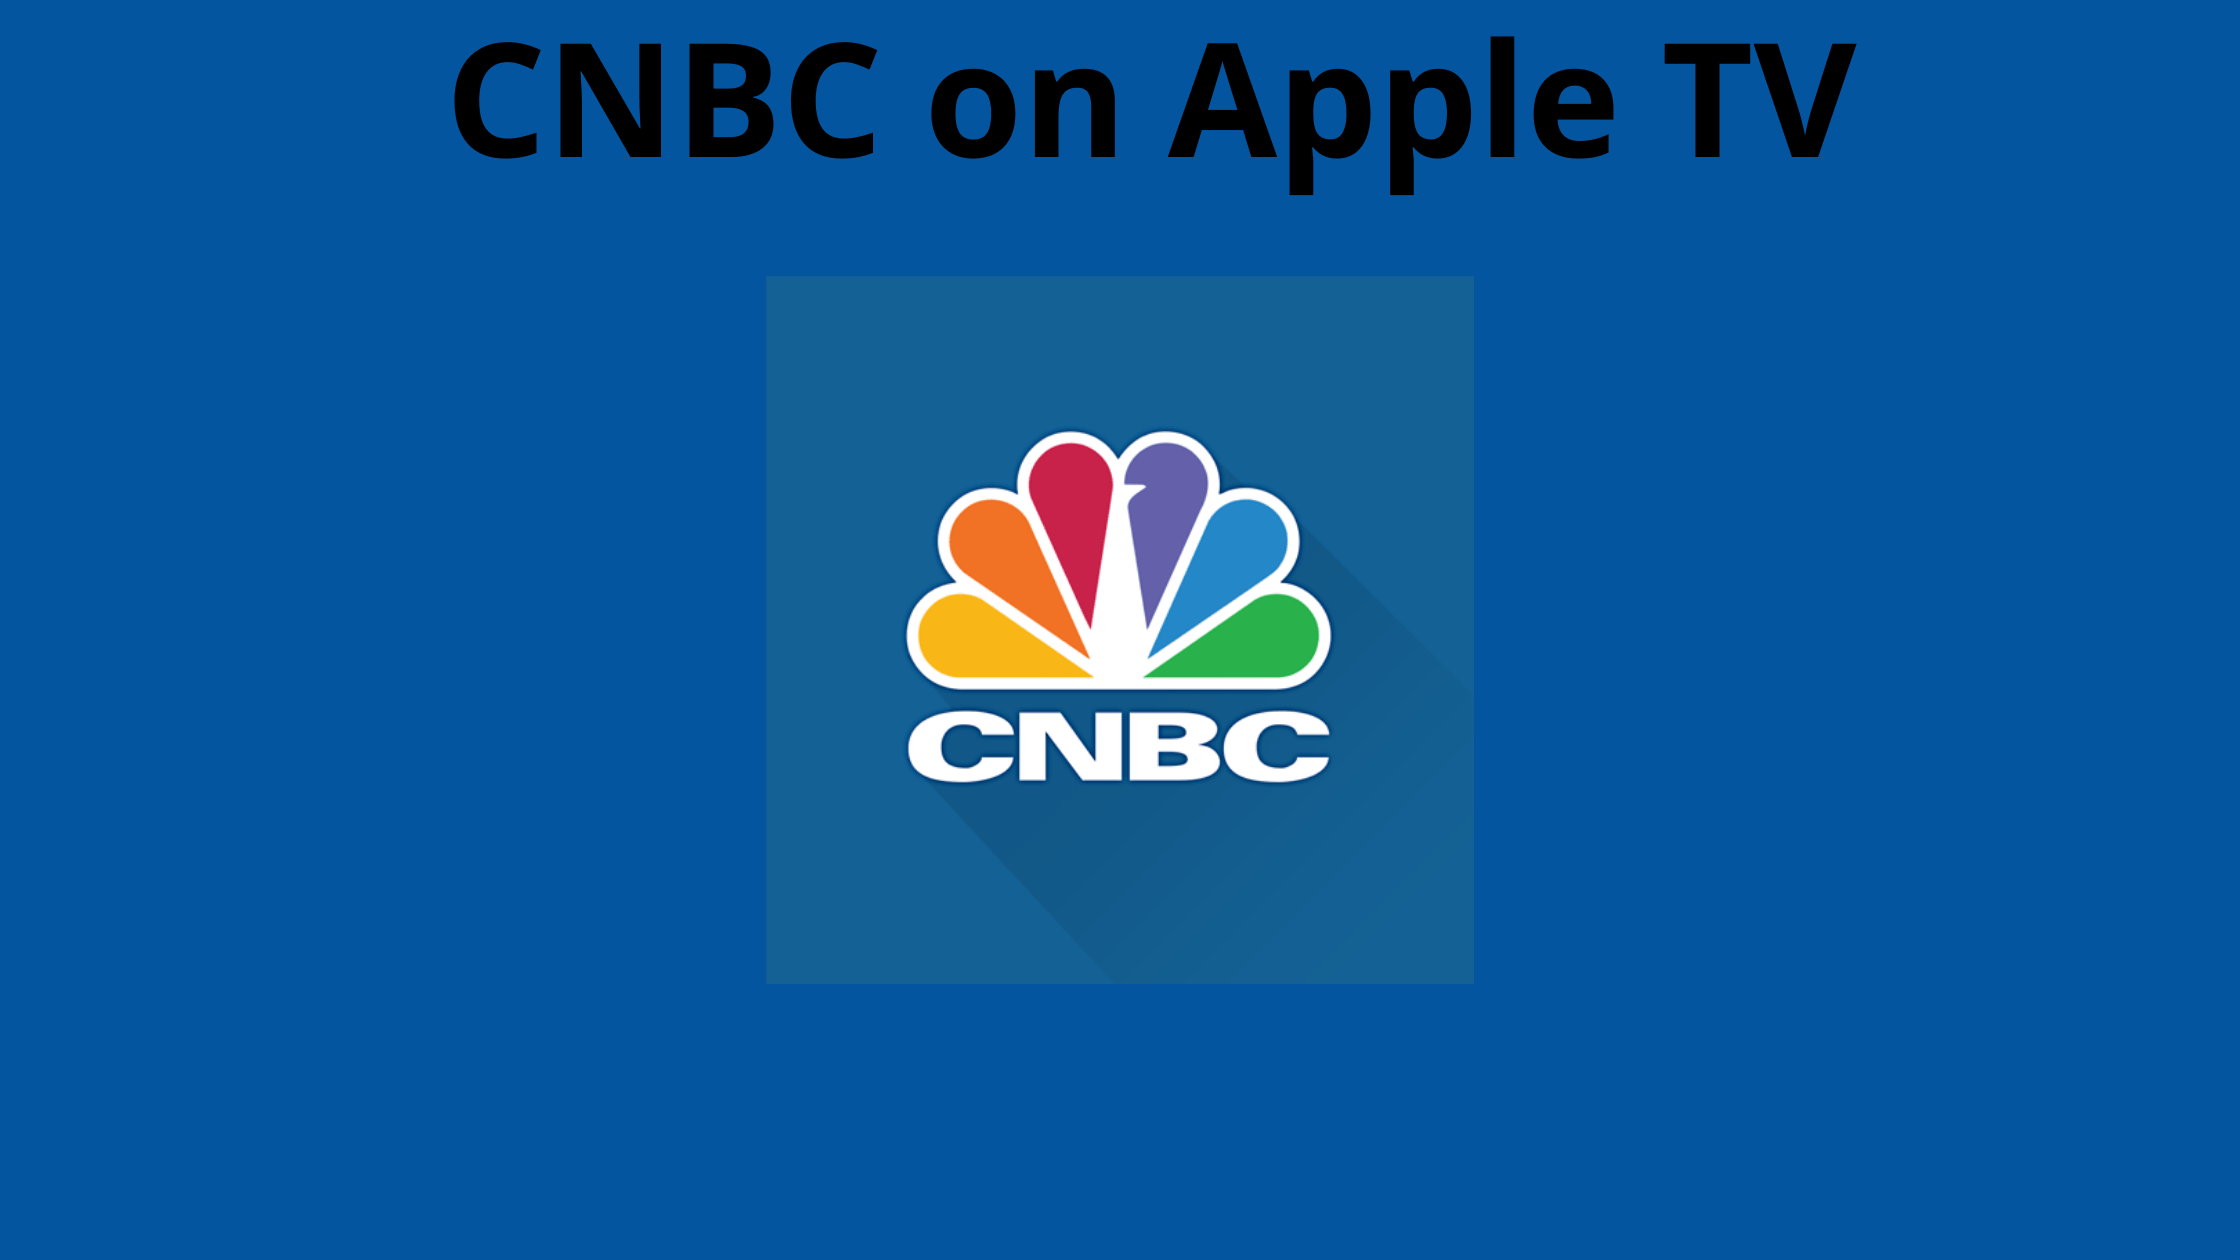 CNBC on Apple TV